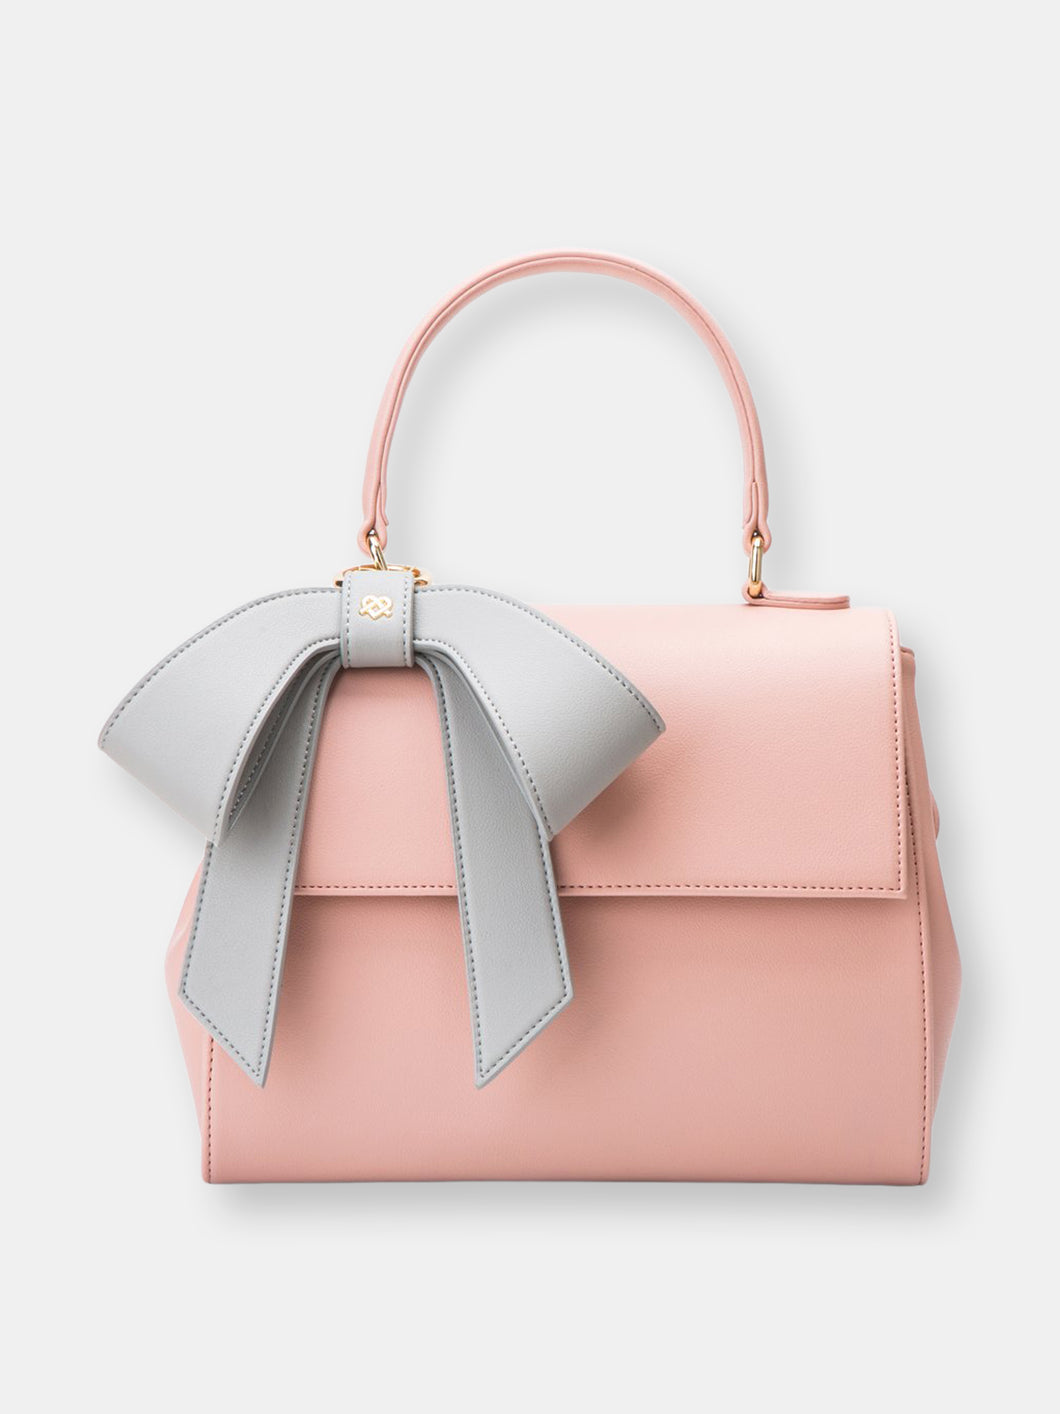 Cottontail - Light Pink Vegan Leather Bag